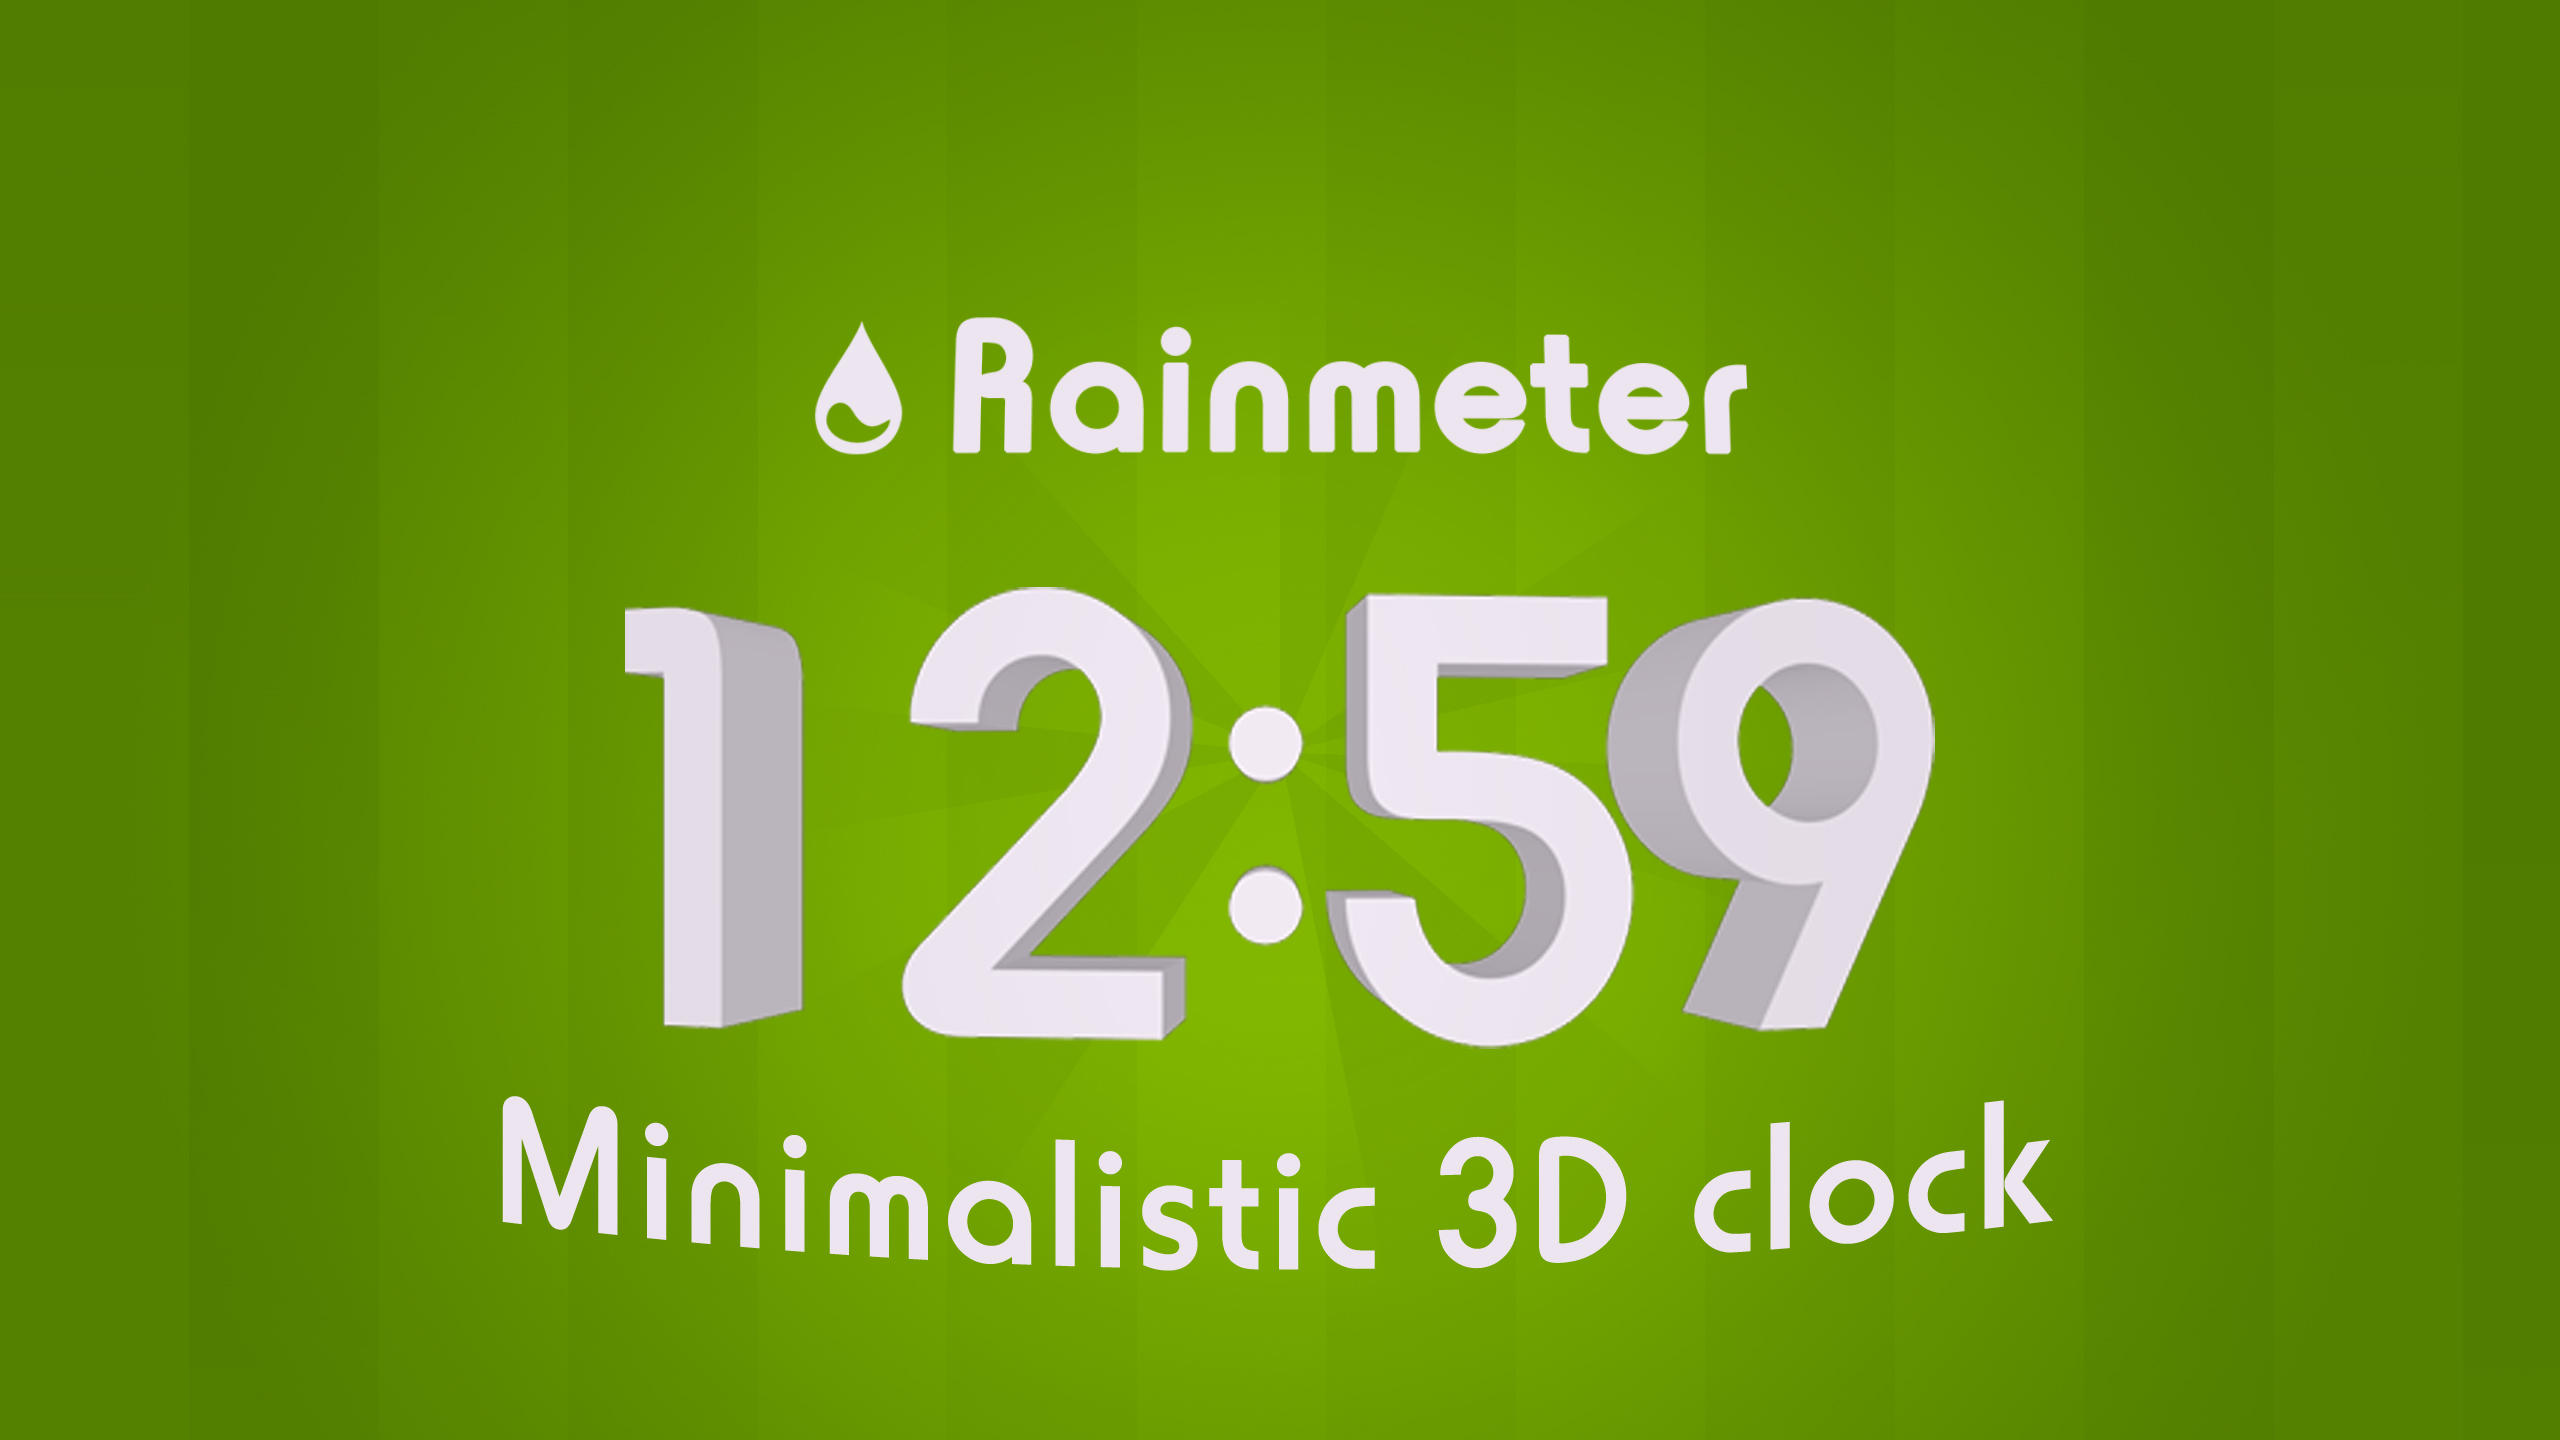 Rainmeter Latest Version Free